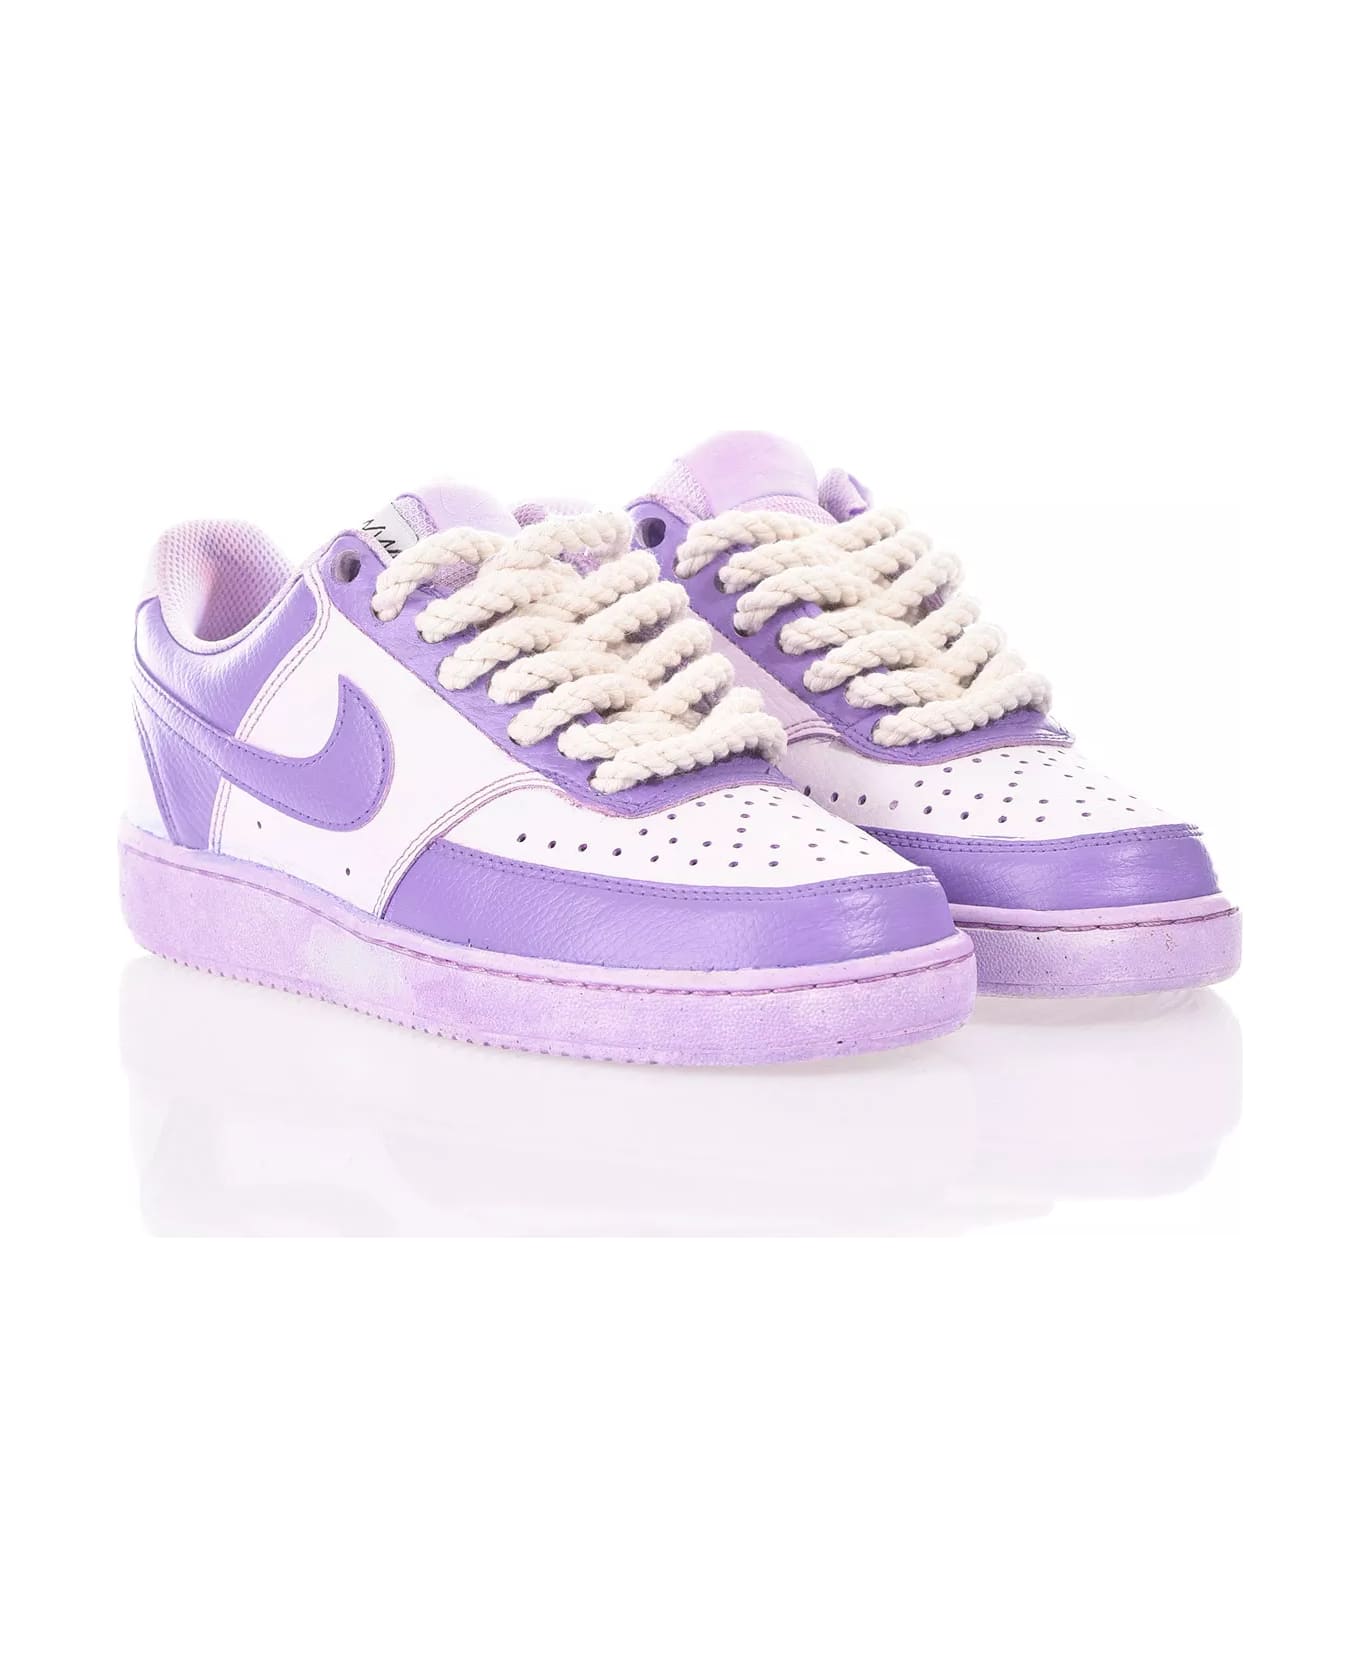 Mimanera Nike Purple Shoes: Mimanerashop.com スニーカー